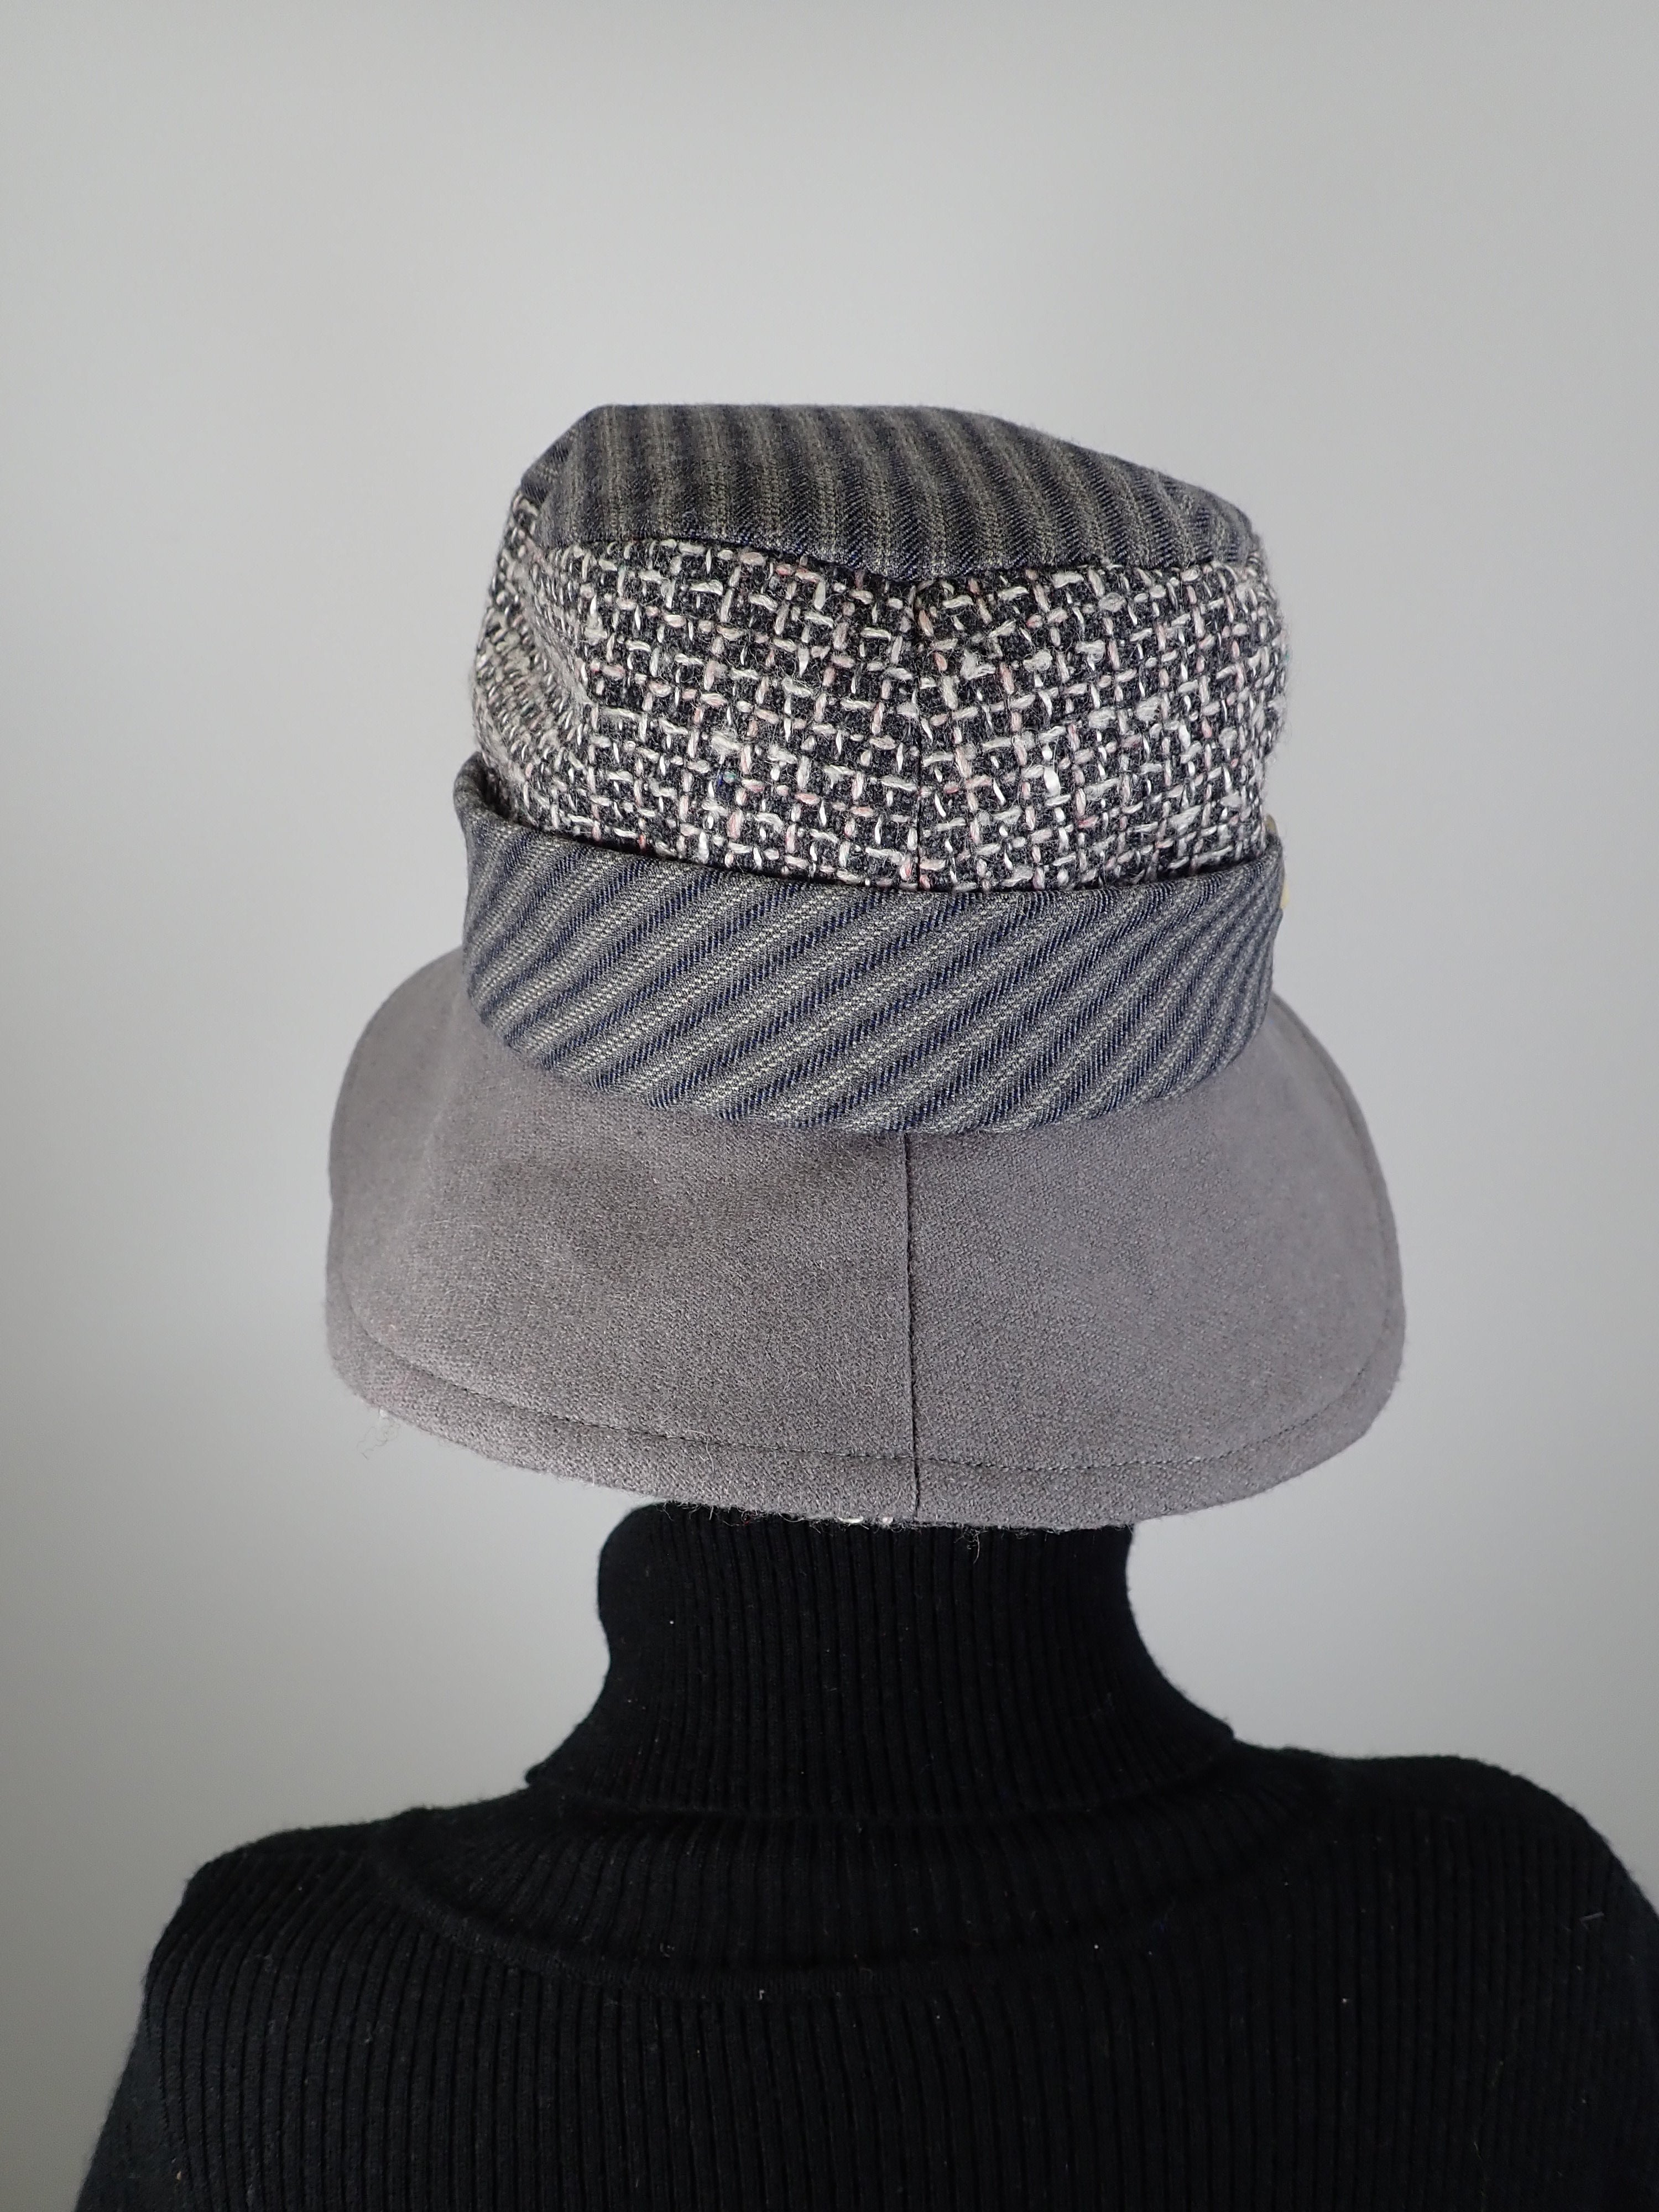 Slow Fashion Hat. Downton Abbey hat. Womens Gray winter medium brim hat. Stylish warm winter hat.